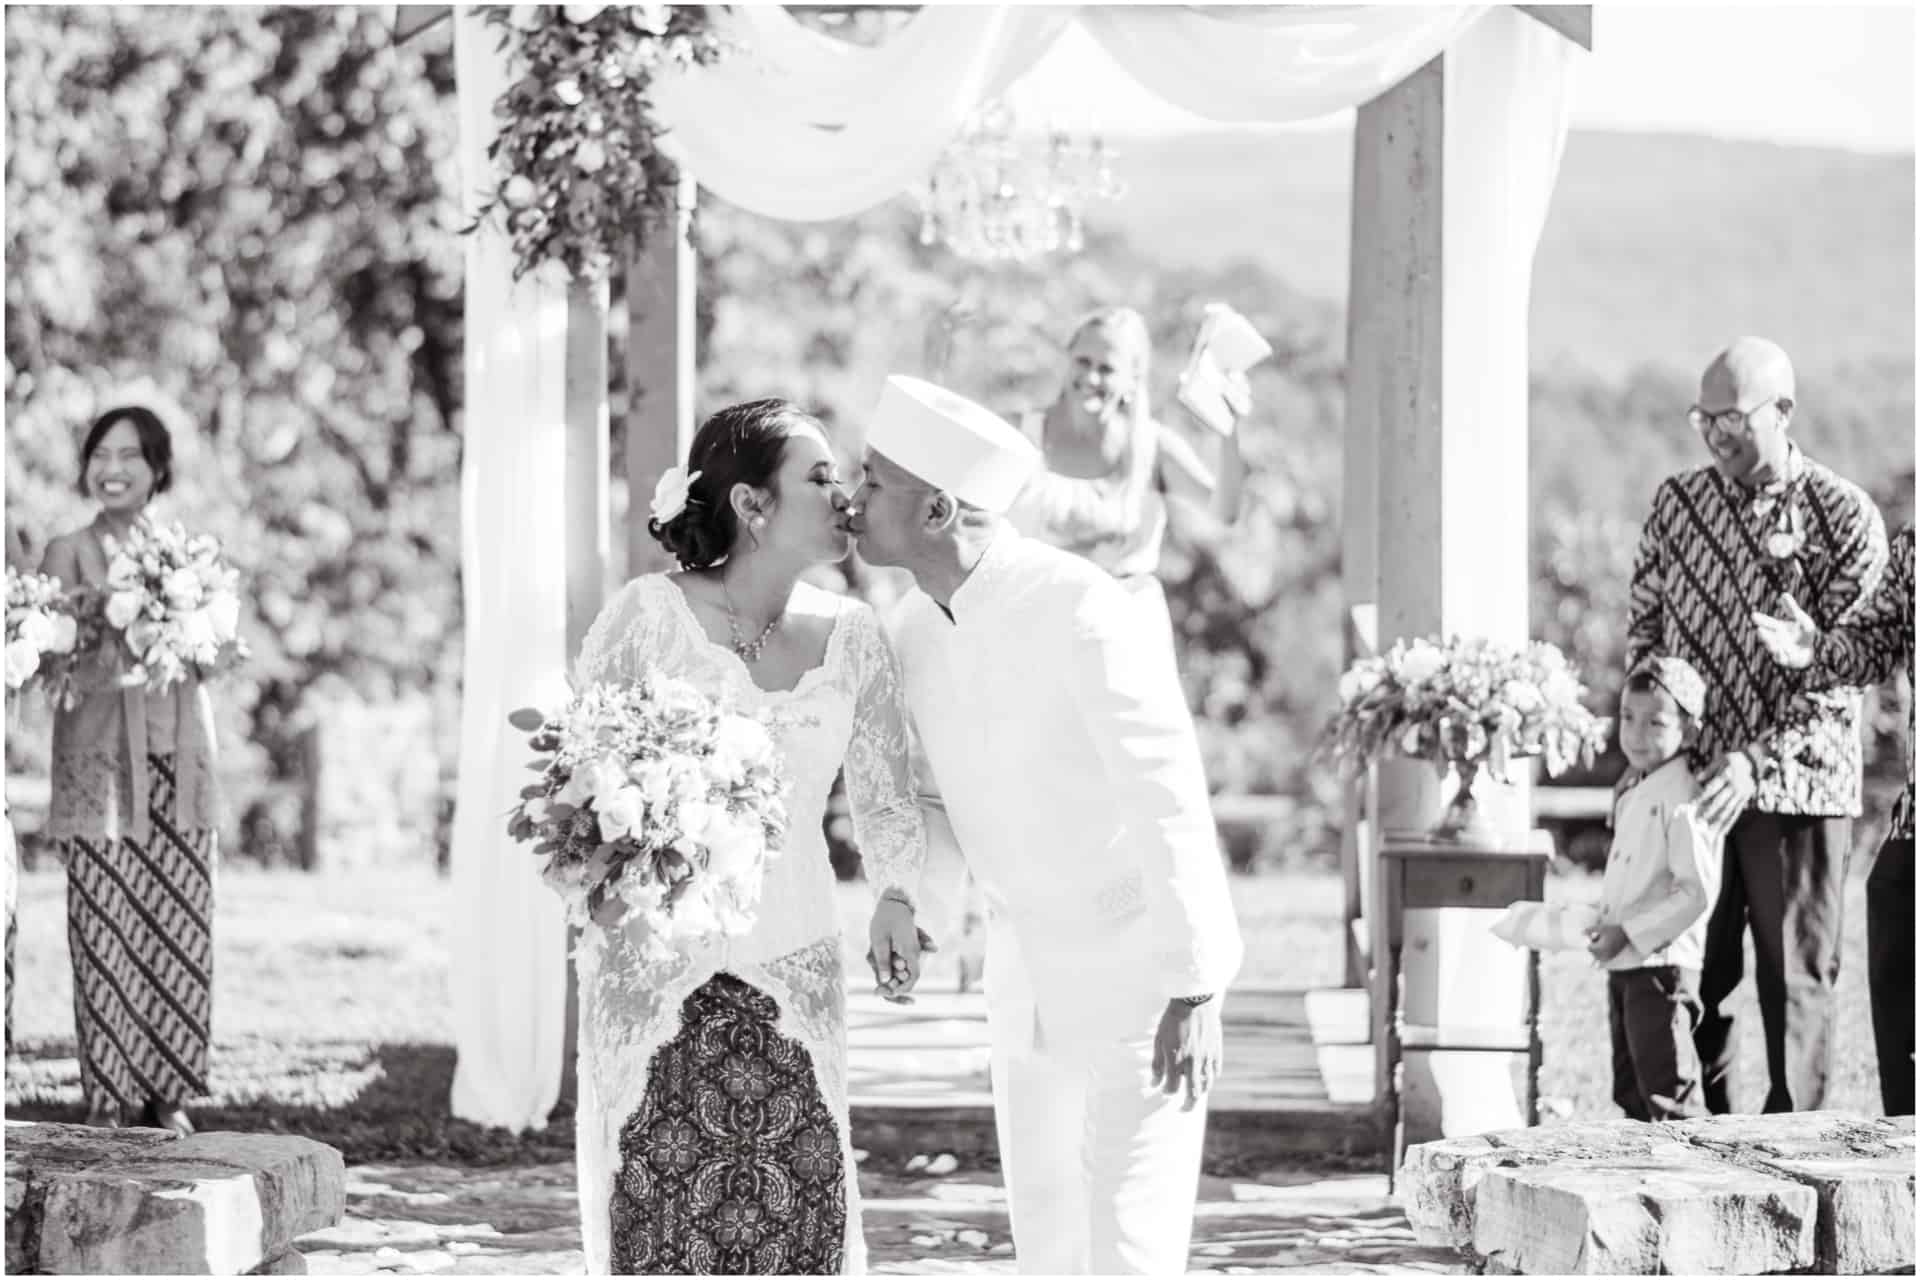 Nadia + Atte - Indonesian Wedding Ceremony Huntsville Alabama